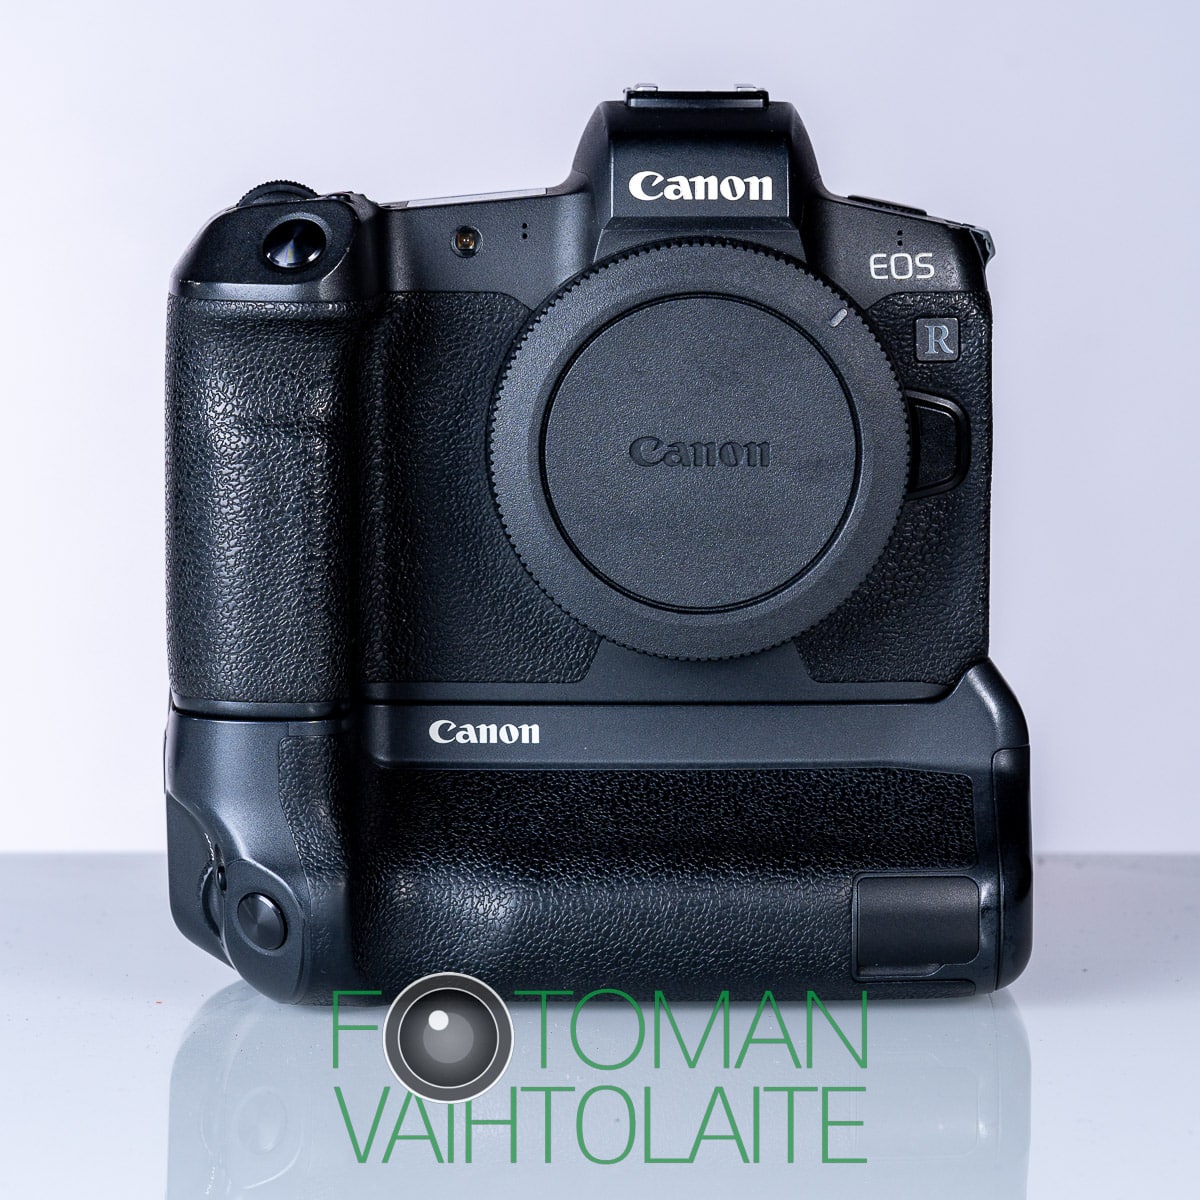 Käytetty Canon Eos R runko & BG-E22 akkukahva (shutter count: 73 000)